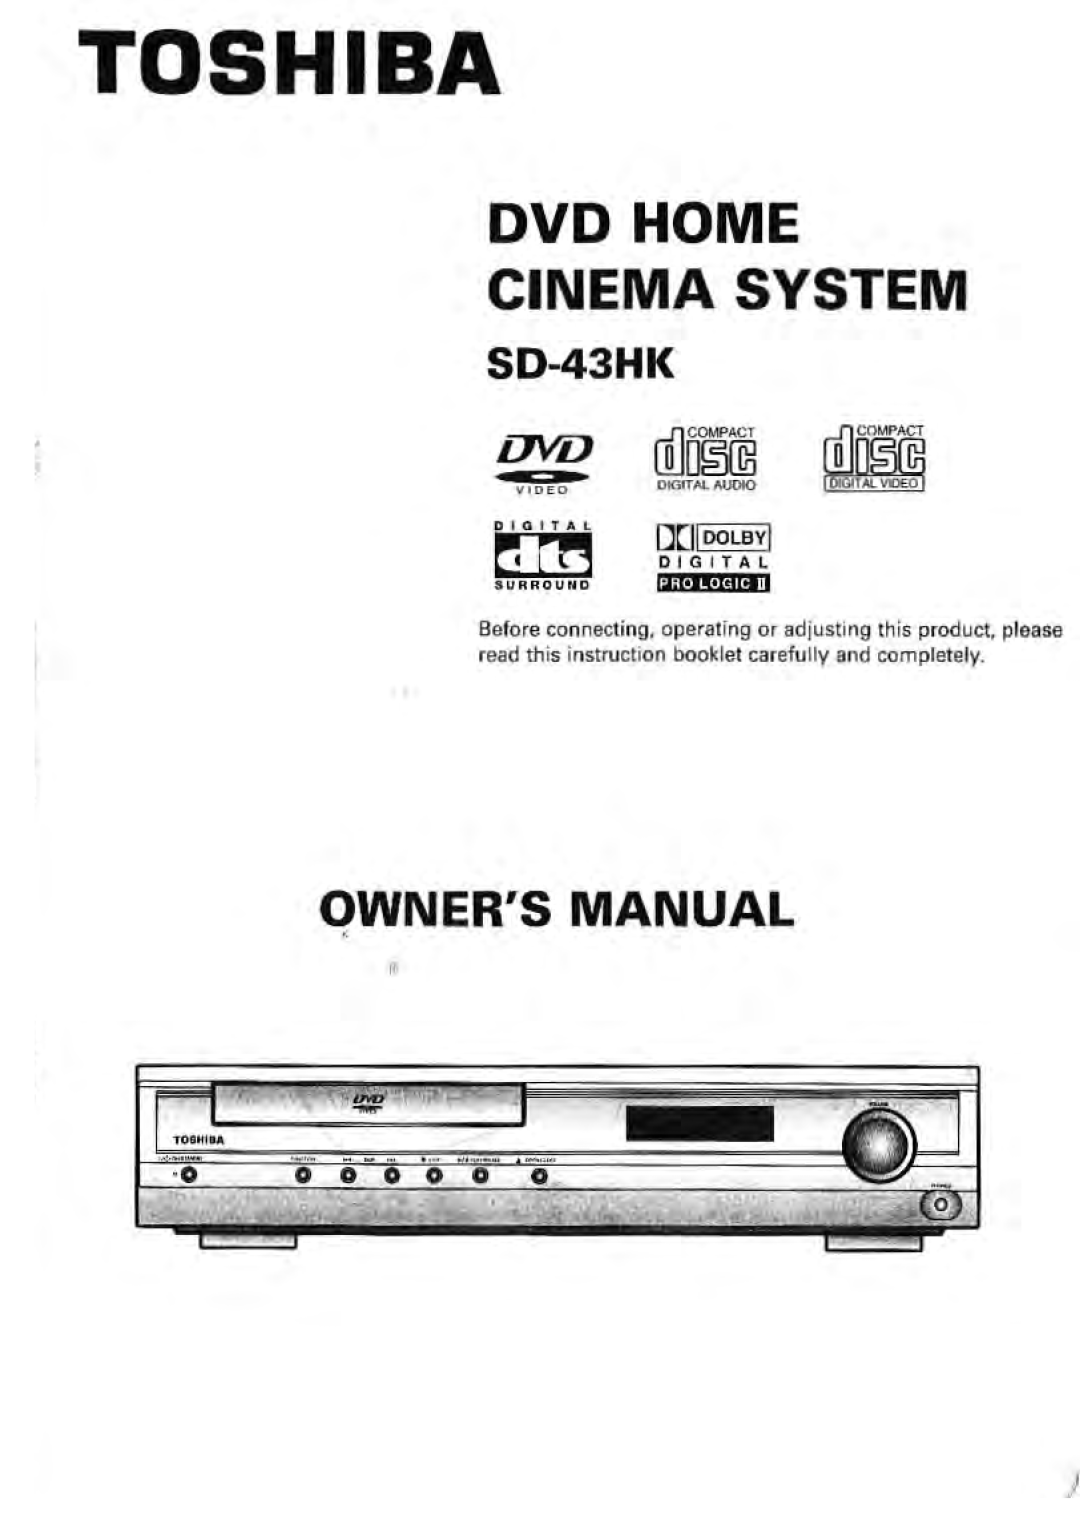 Toshiba SD-43HK owner manual Dvd Home Cinema System, Owner’S Manual, AH68-01289C, V I D E O, Digital Video 